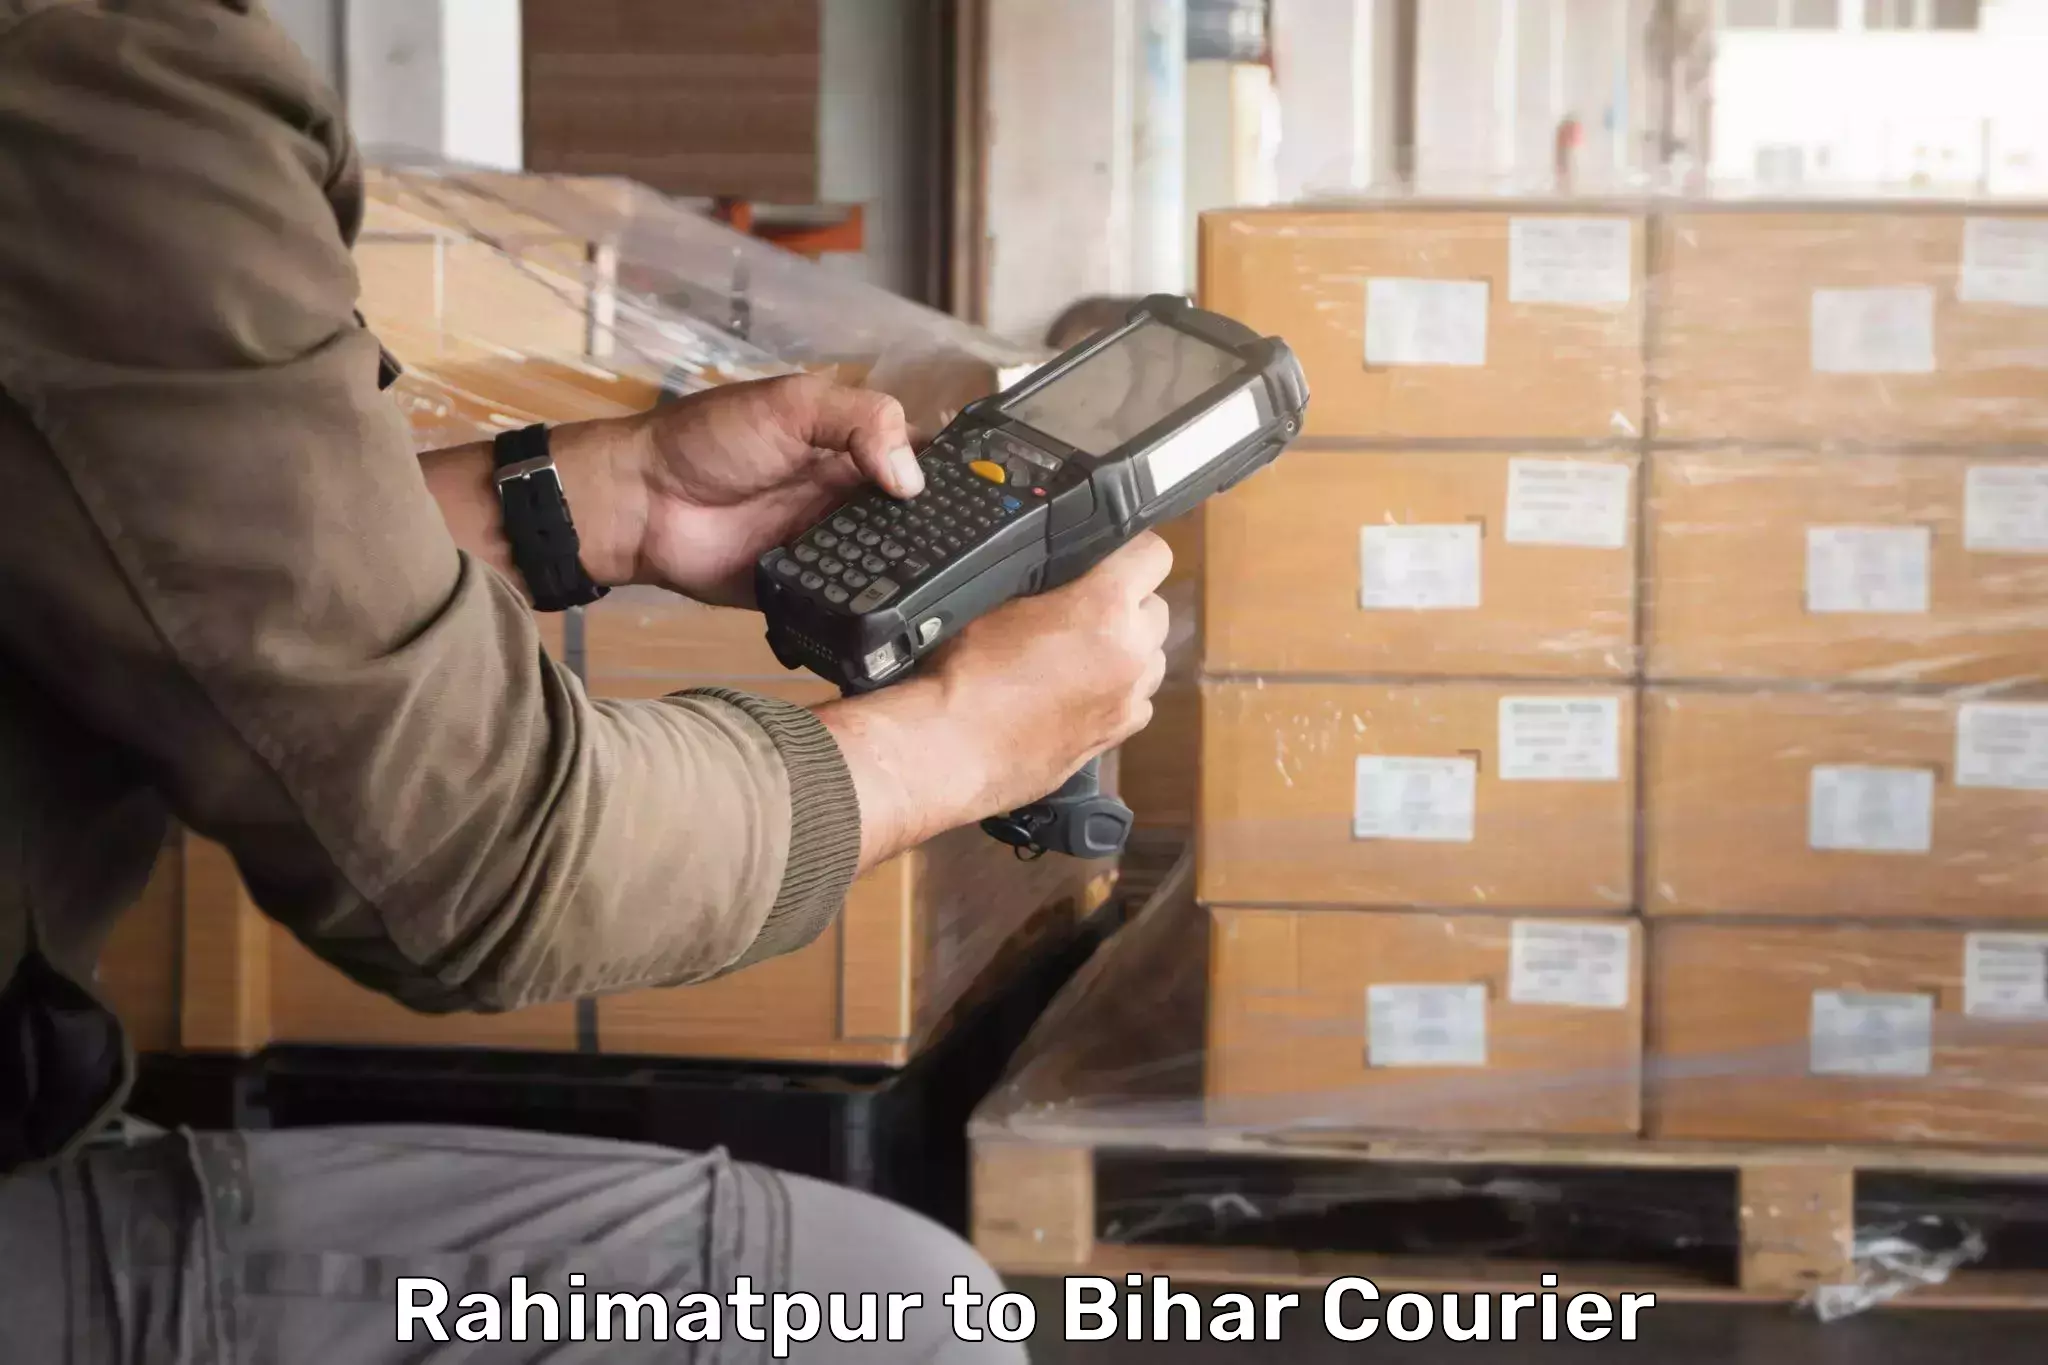 On-call courier service Rahimatpur to Aurangabad Bihar